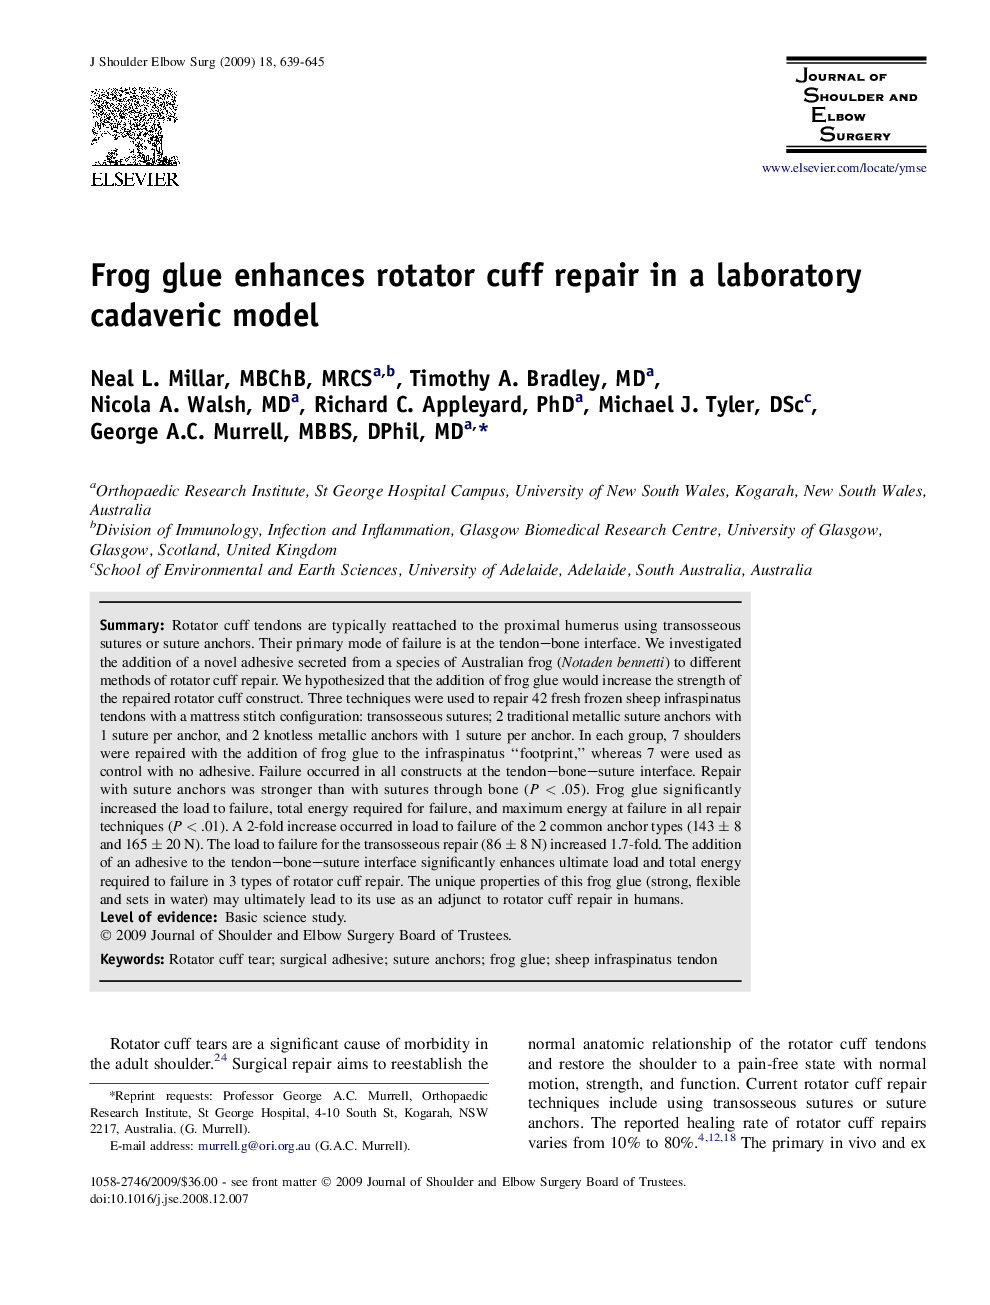 Frog glue enhances rotator cuff repair in a laboratory cadaveric model